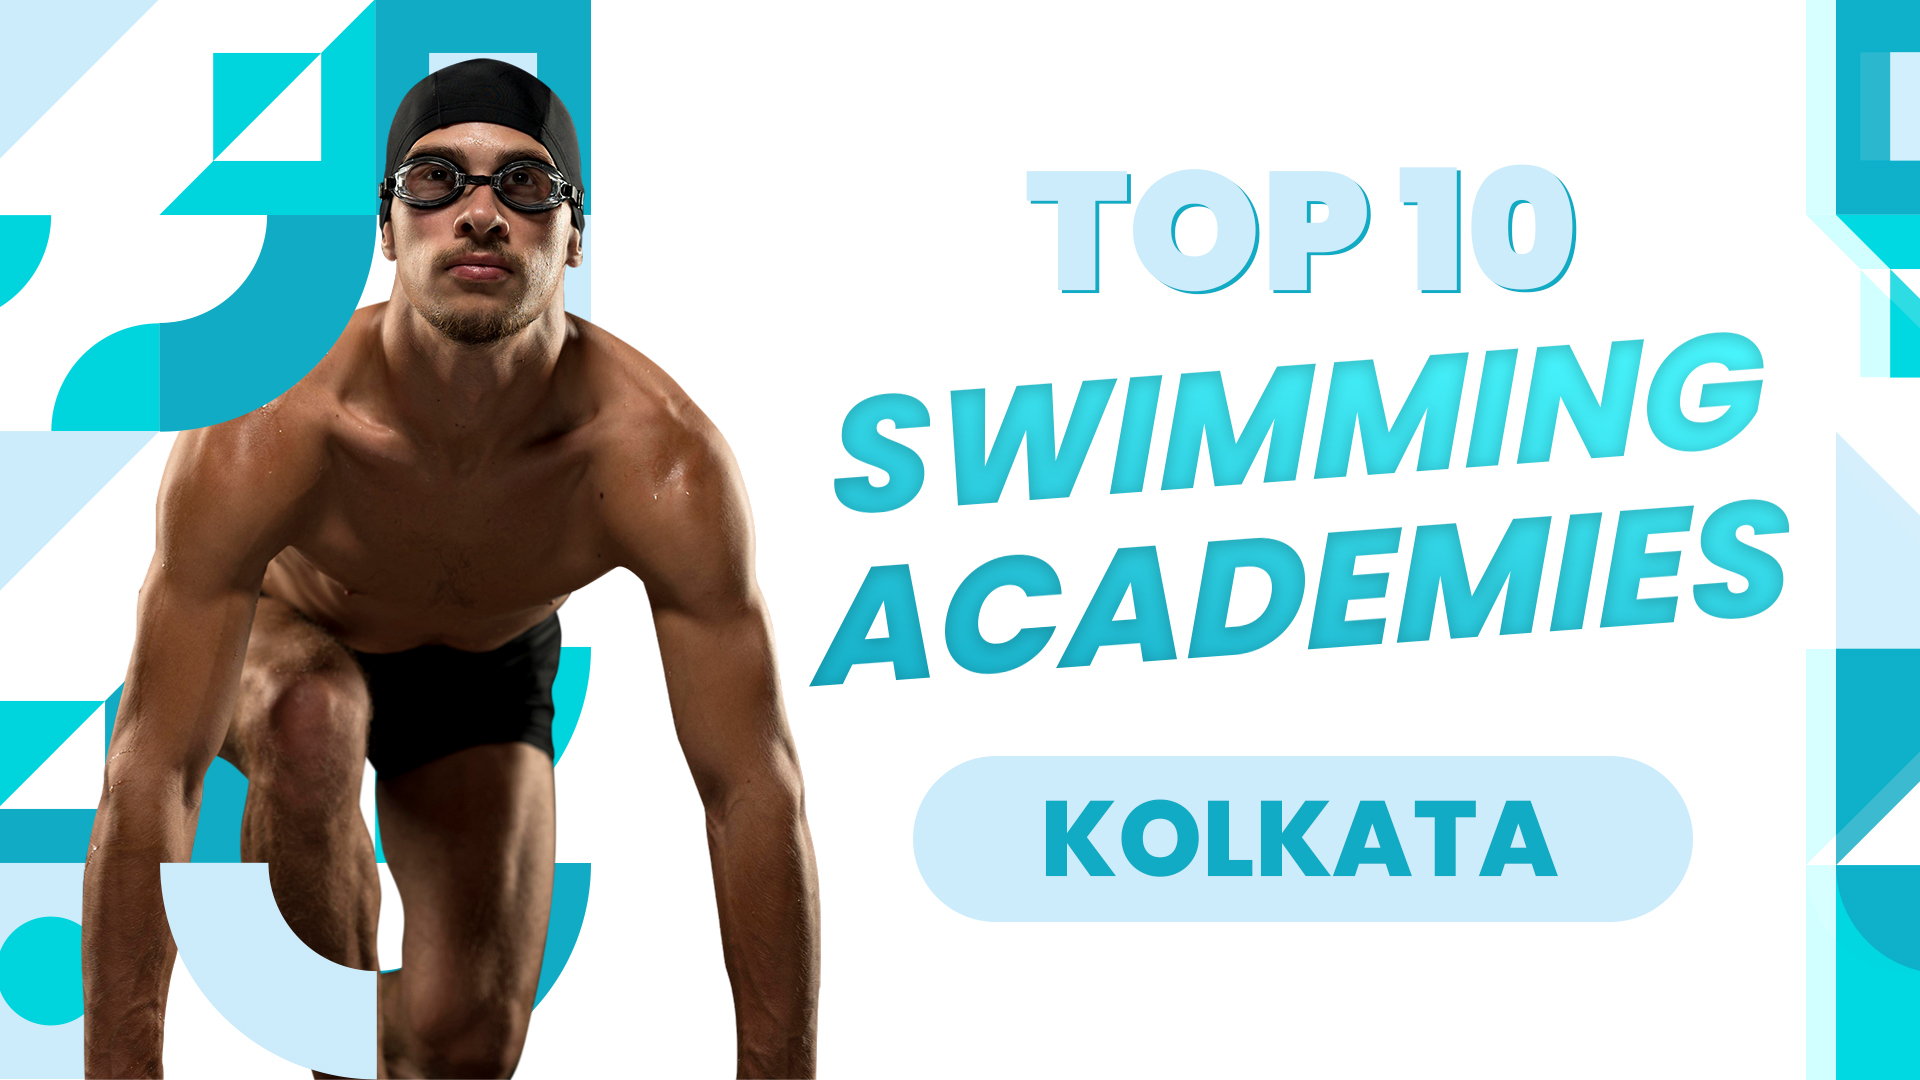 Top 10 Swimming Academies in Kolkata, India